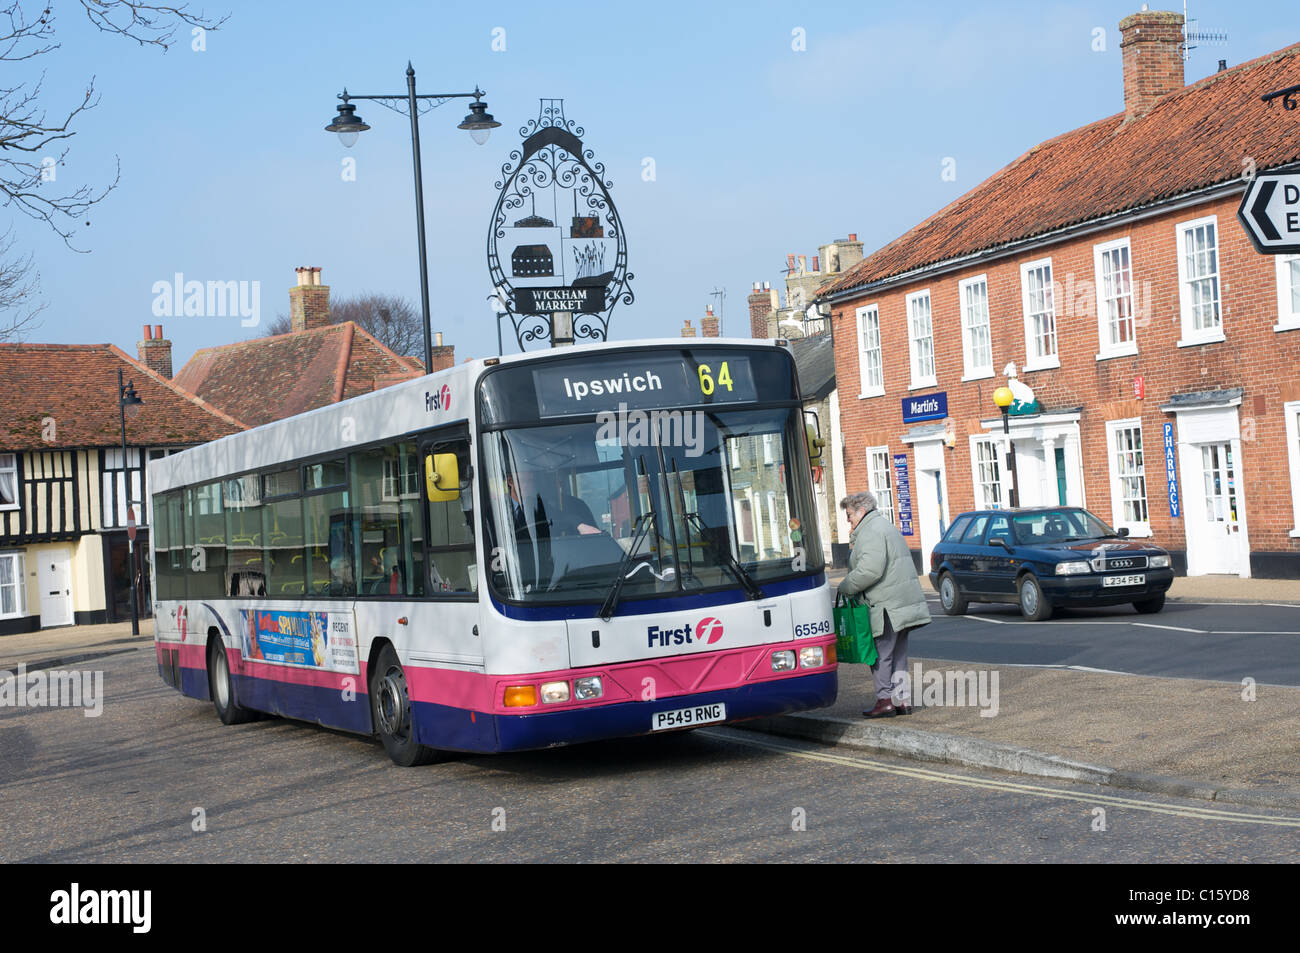 First bus on route to Ipswich, Wickham Market, Suffolk, UK. Stock Photo